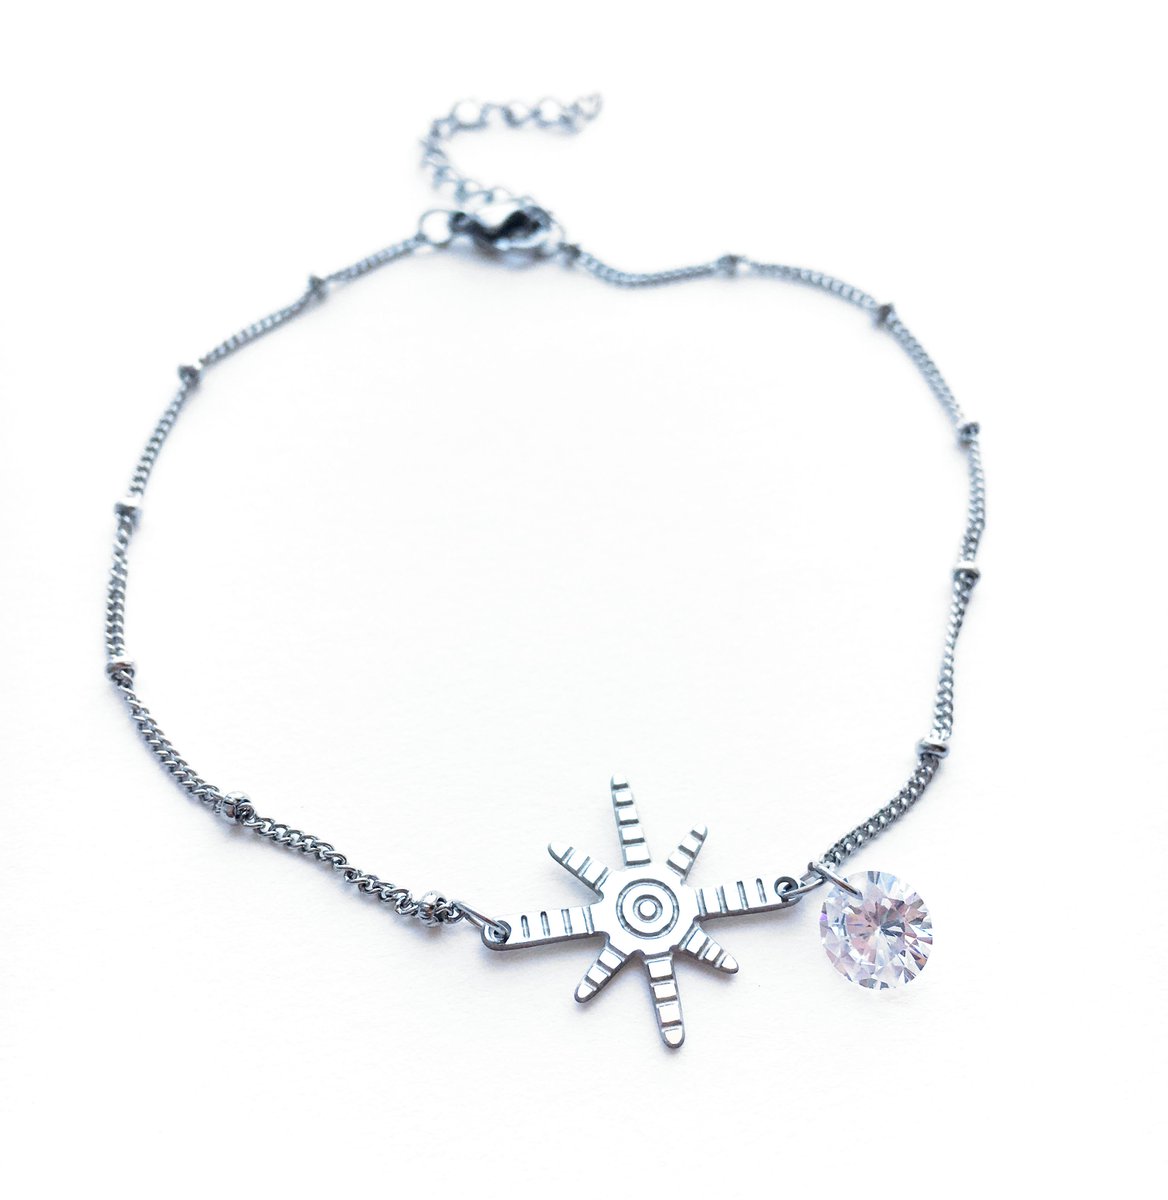 Star anklet in stainless steel: etsy.me/2v6SgjM #olizzjewelry #anklet #staranklet #anklebracelet #silveranklet #footjewelry